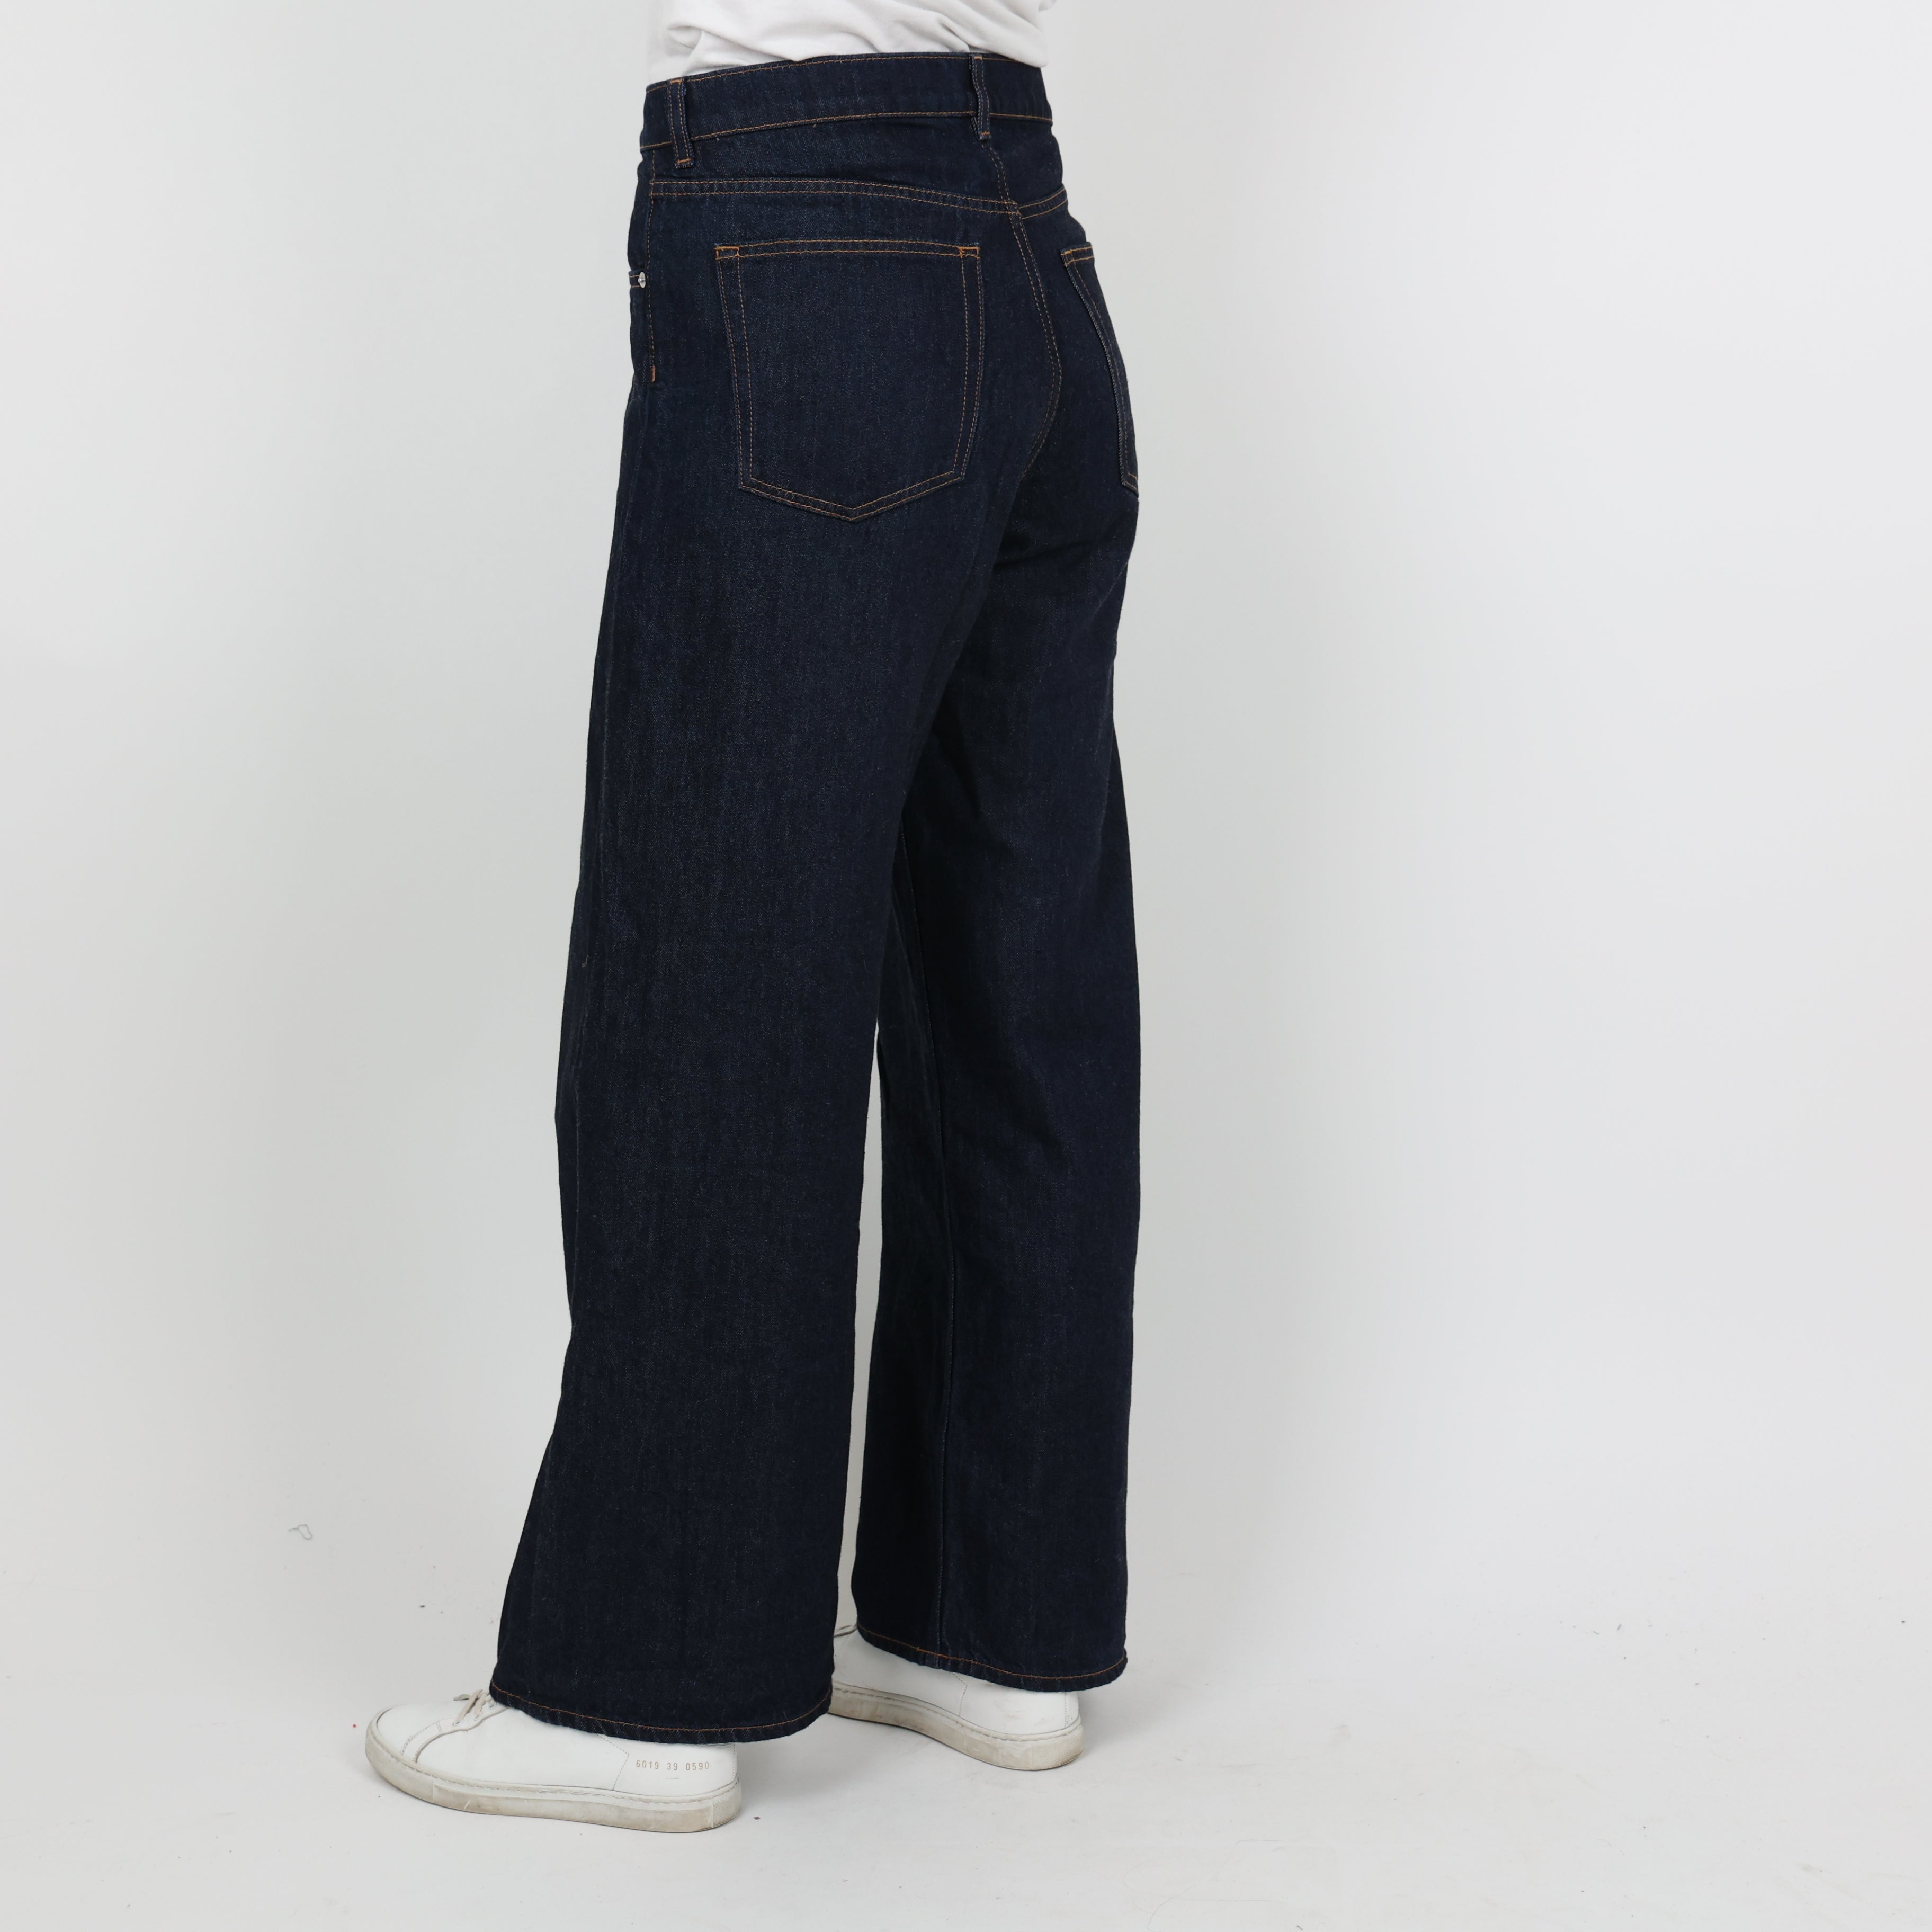 Jeans, Waist 30